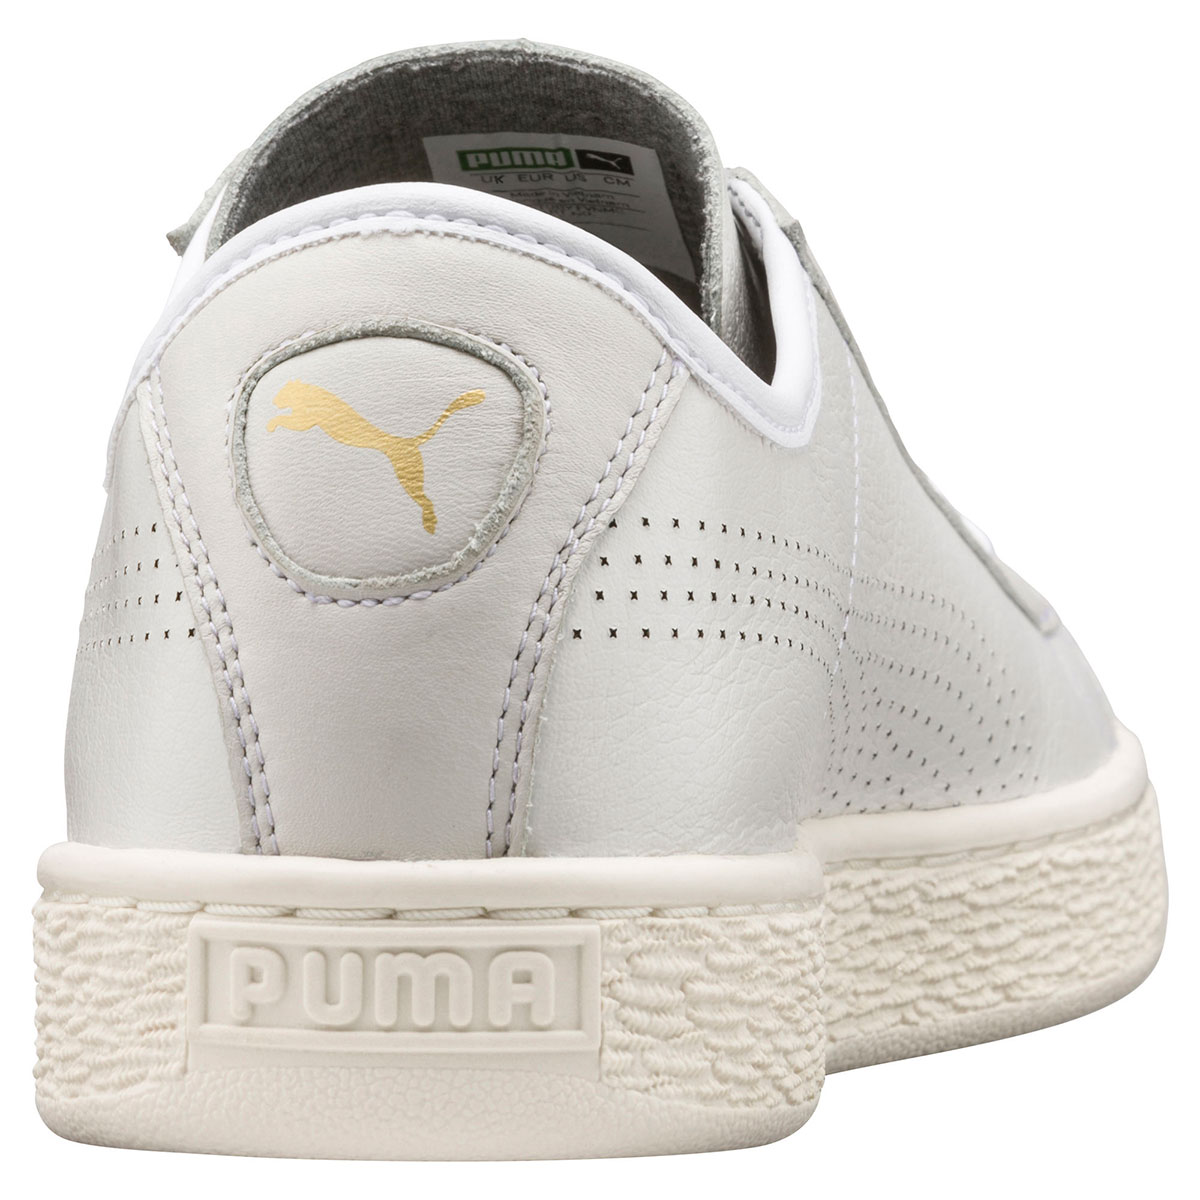 Puma Basket Classic Soft grey  363824-04